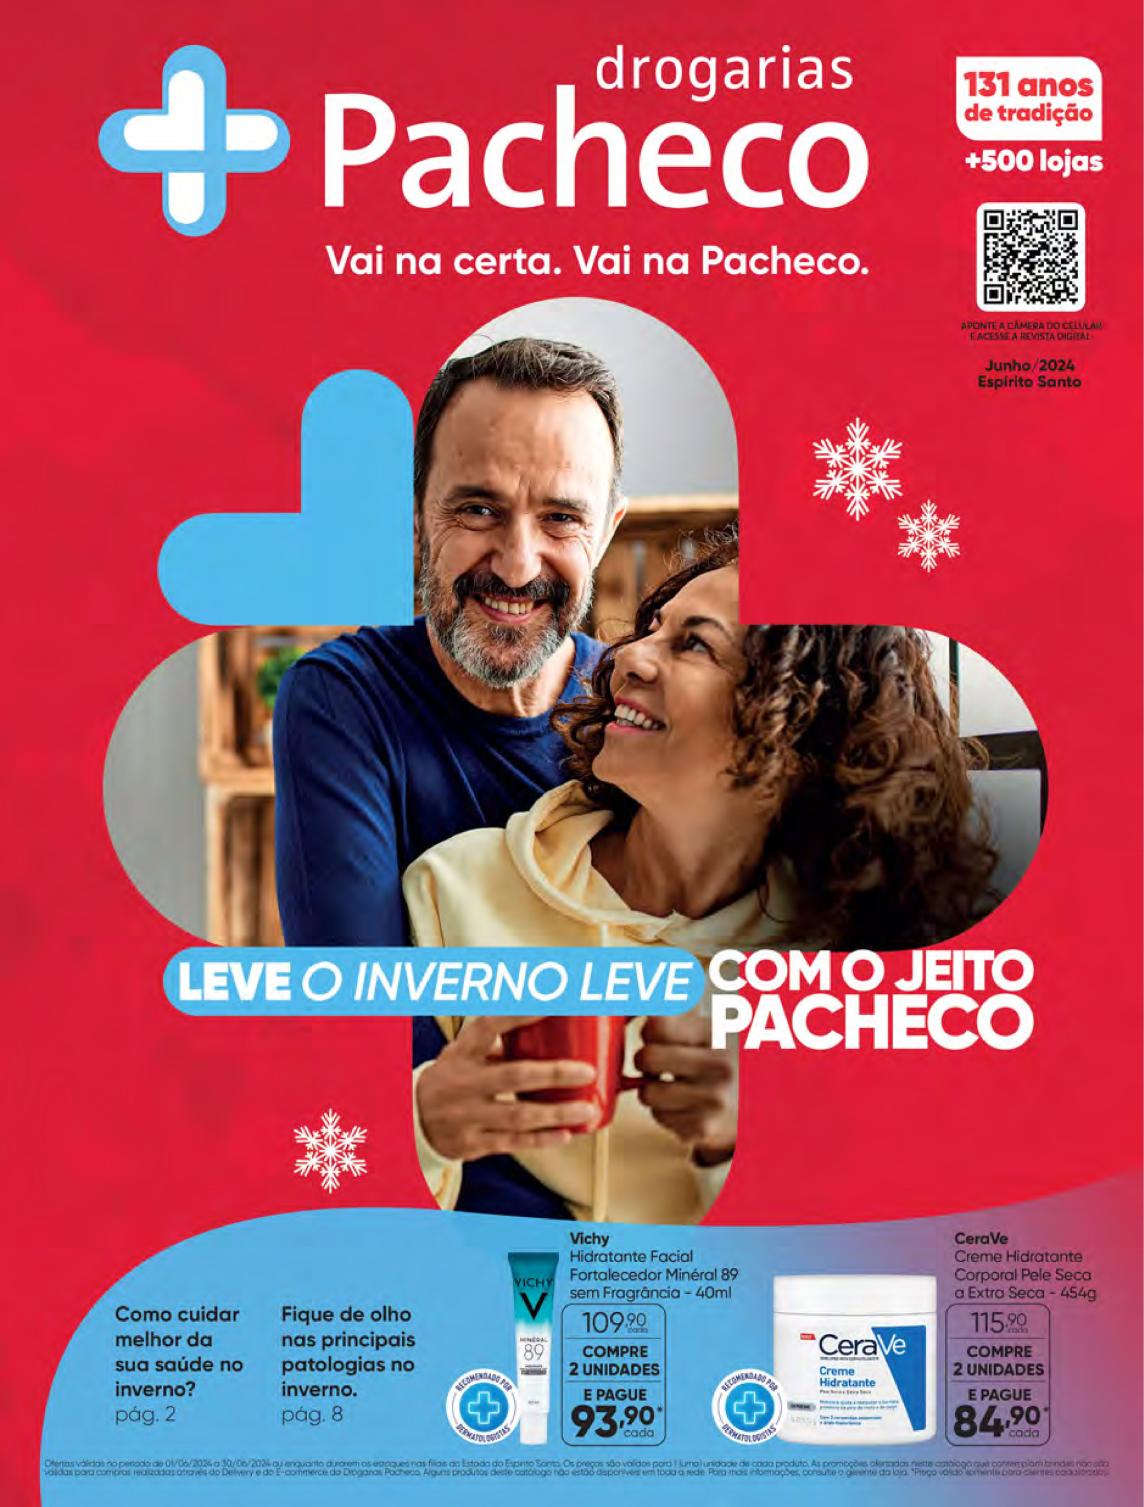 Drogarias Pacheco updated their cover - Drogarias Pacheco